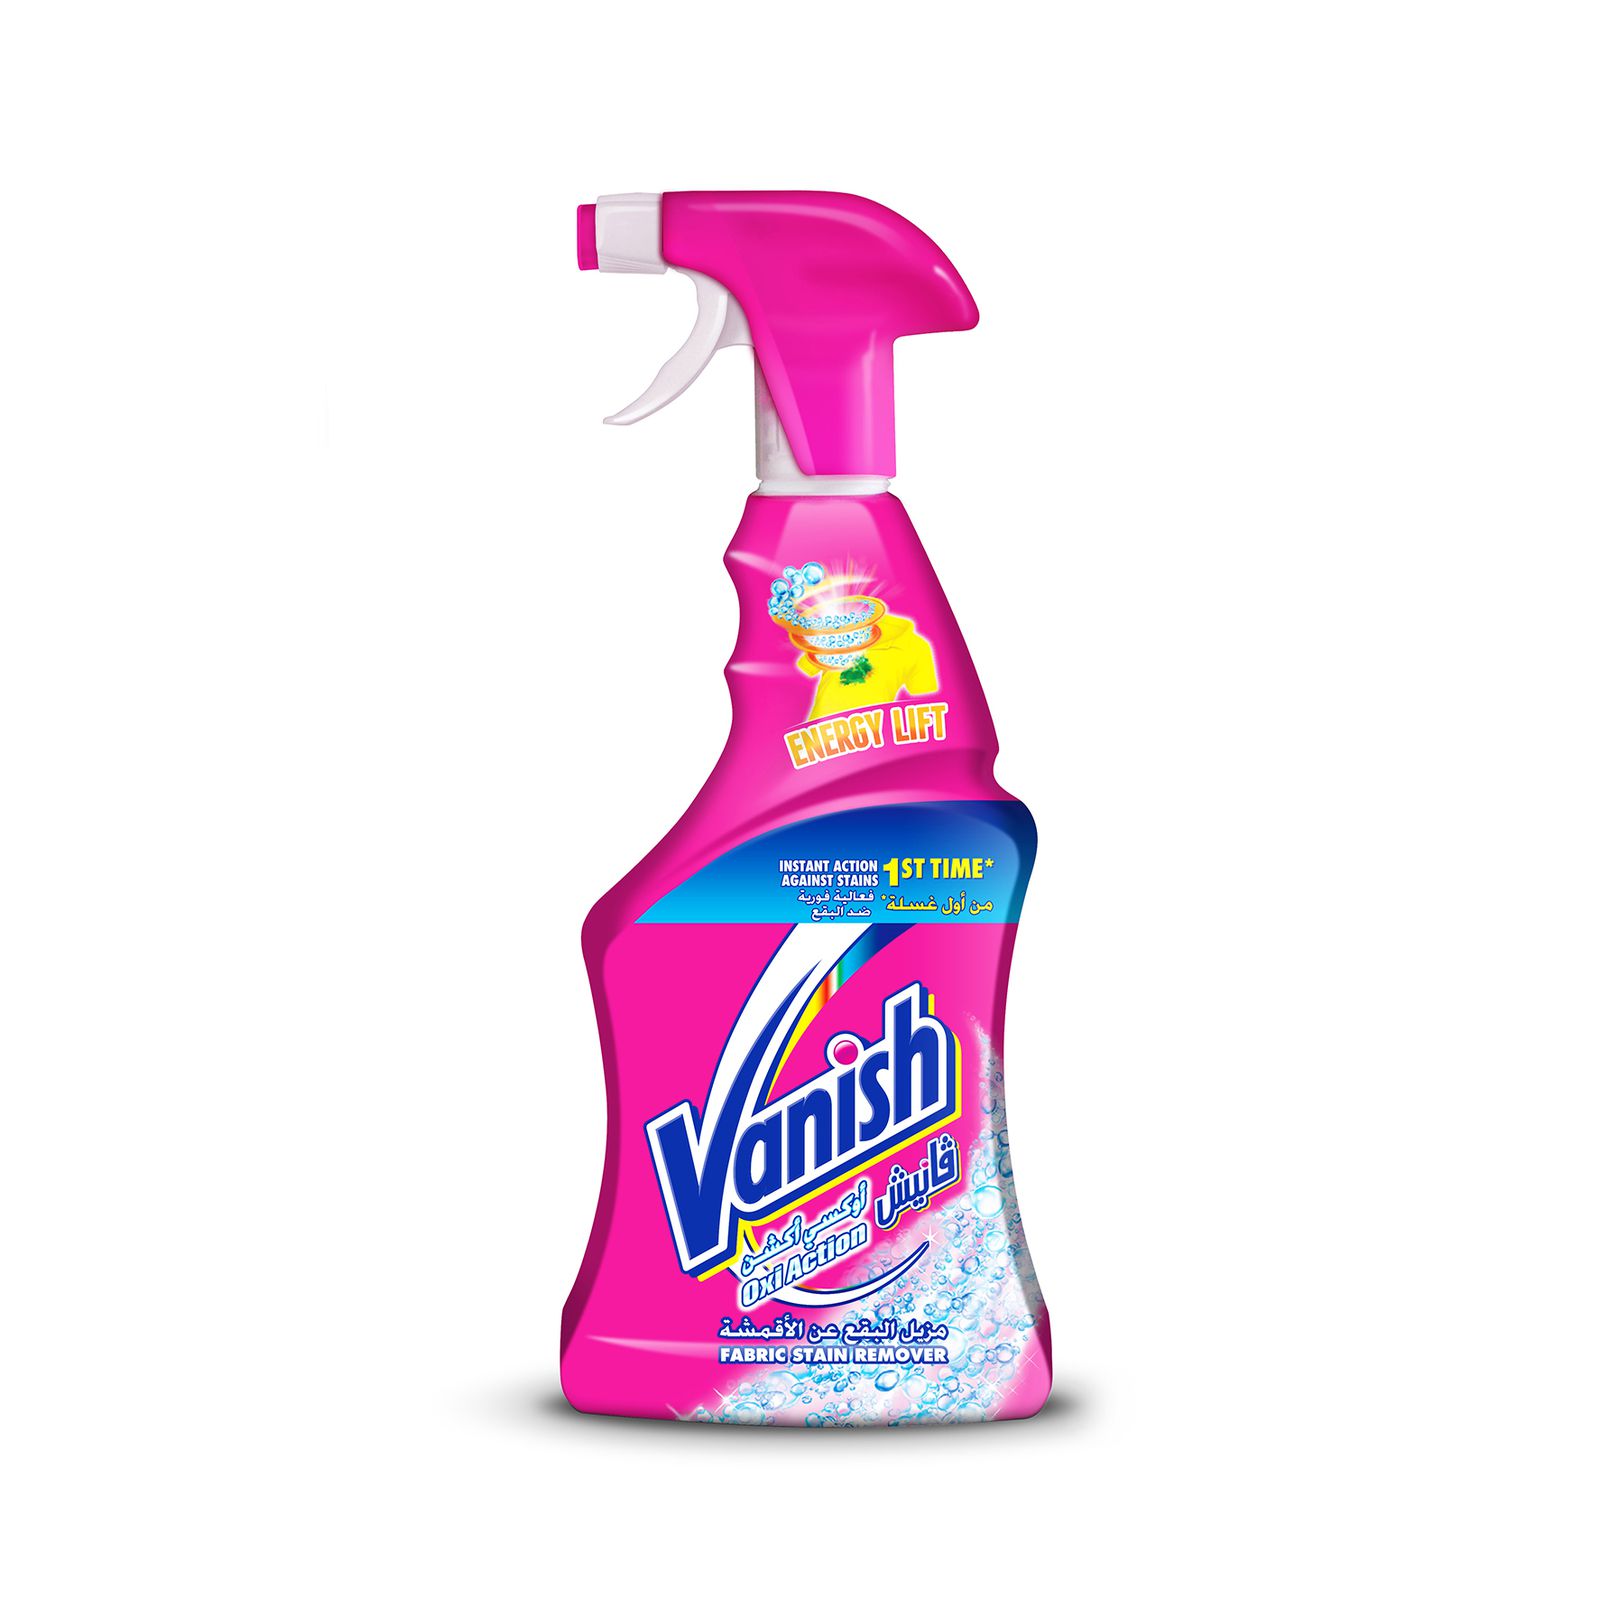 Vanish Products